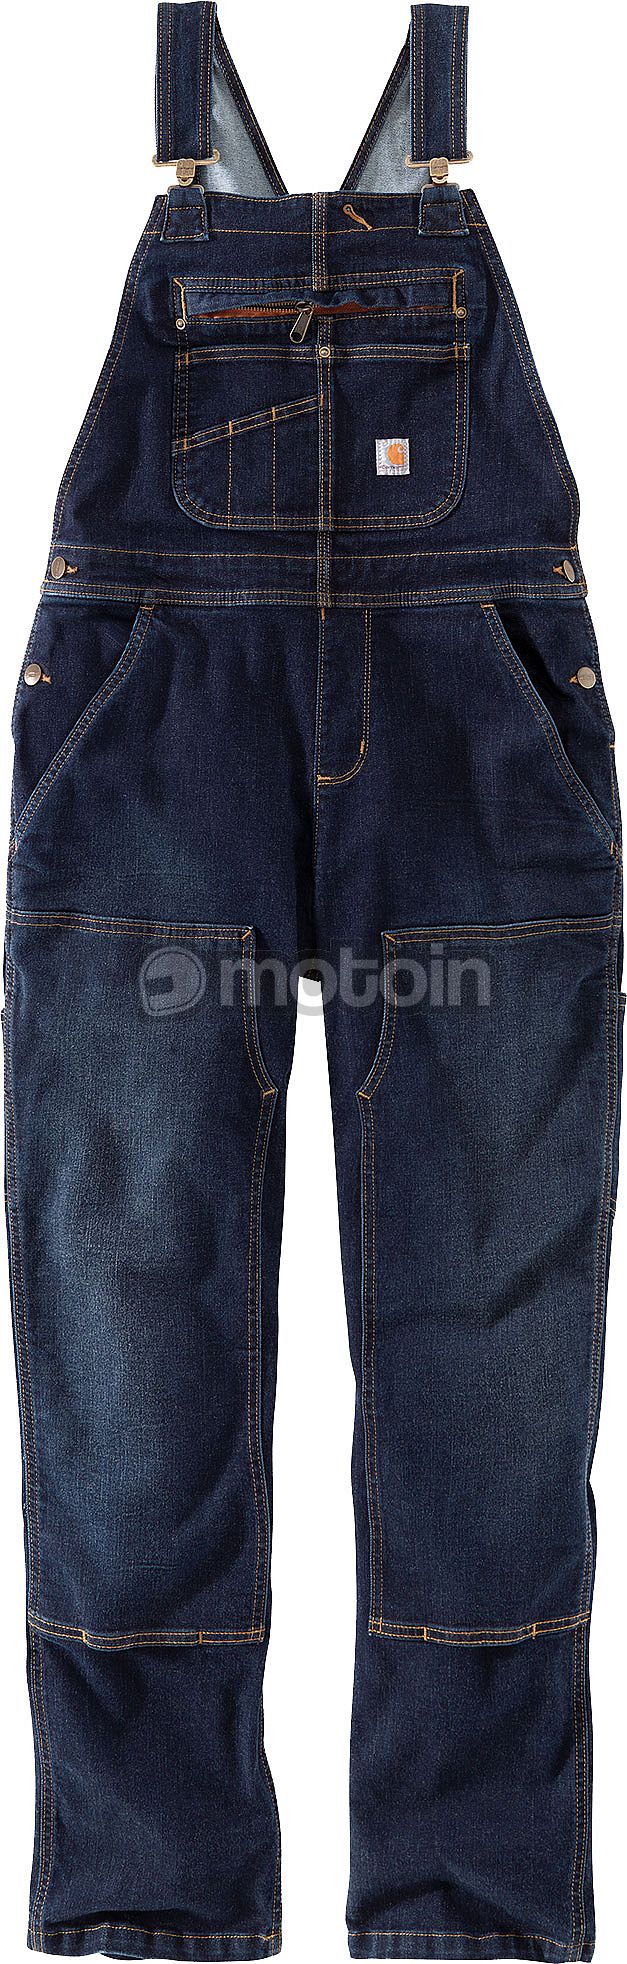 Carhartt Double Front, Jeans-Latzhose